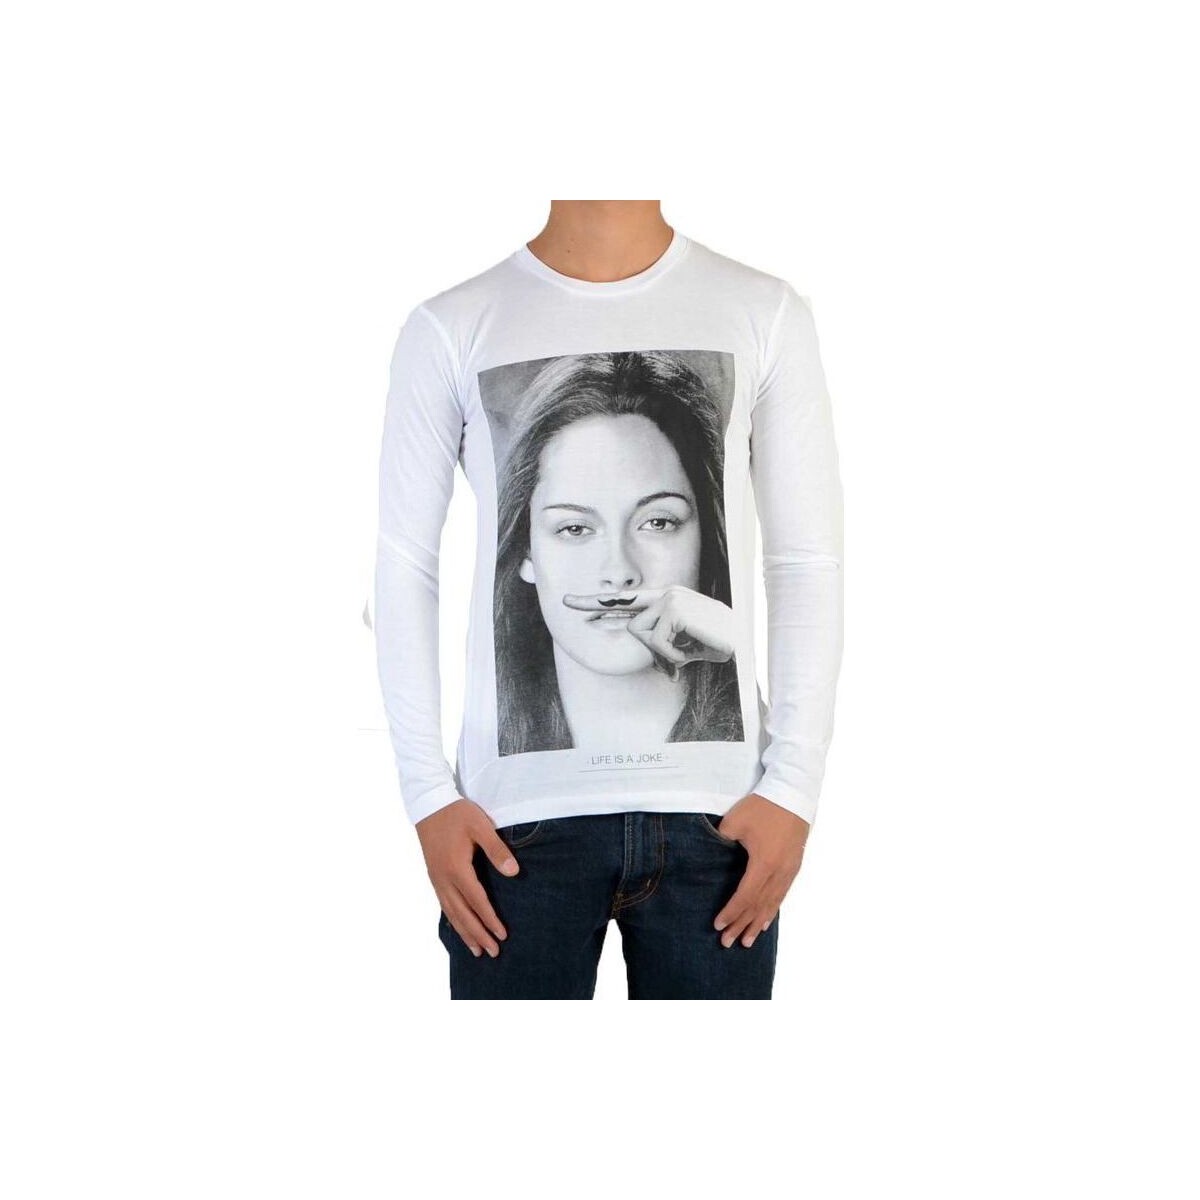 textil Pige Langærmede T-shirts Eleven Paris 34577 Hvid